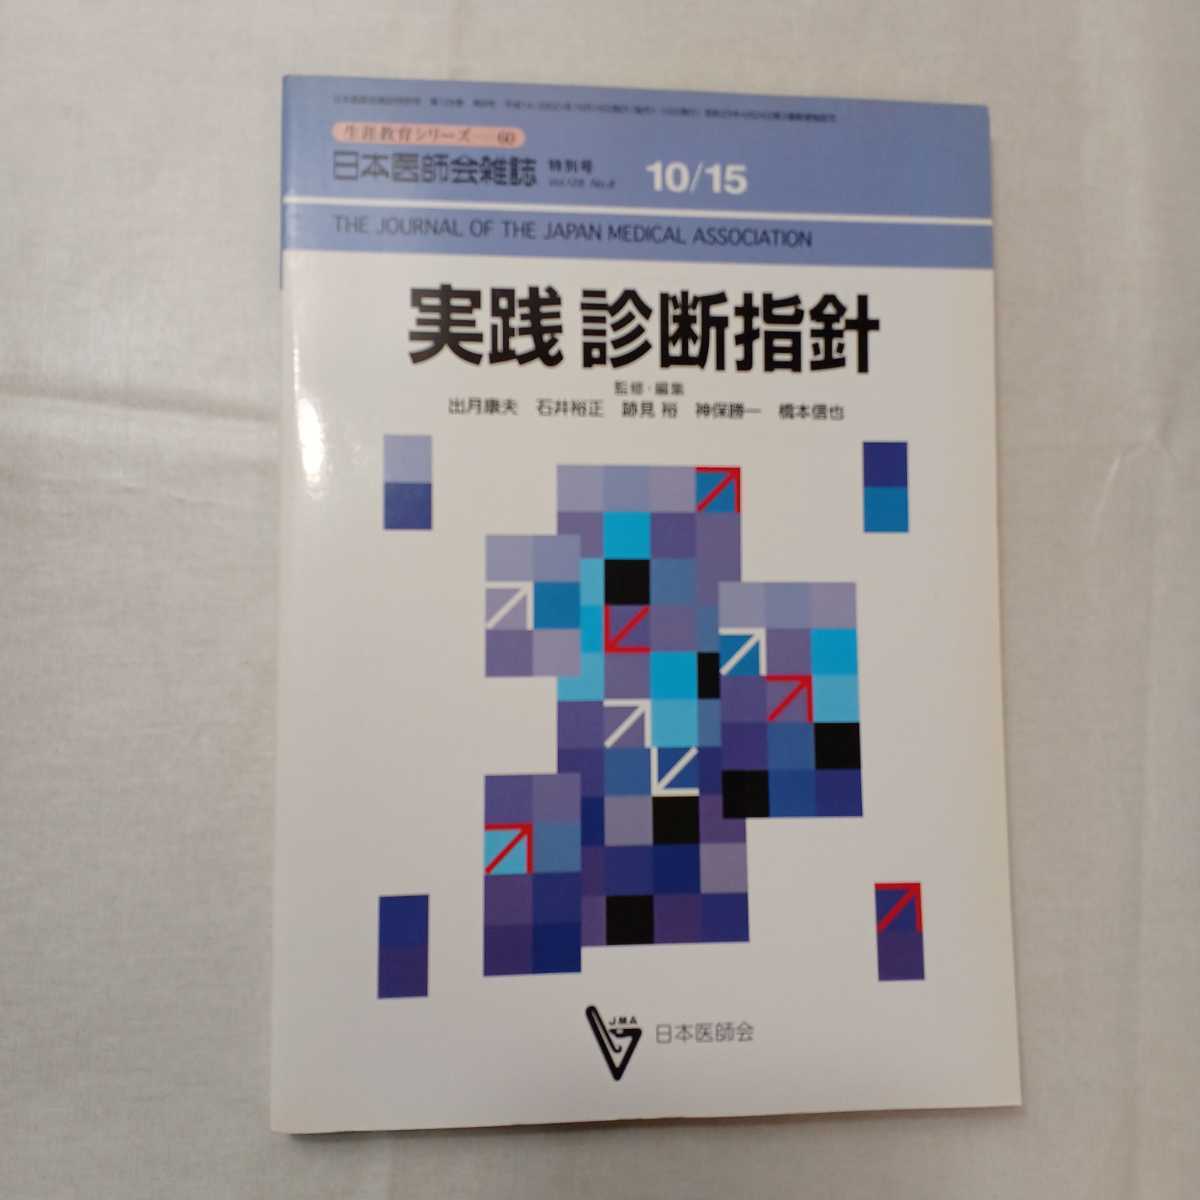 zaa-413♪実践診断指針 日本医師会雑誌 　日本医師会(発行)　2002/10/25